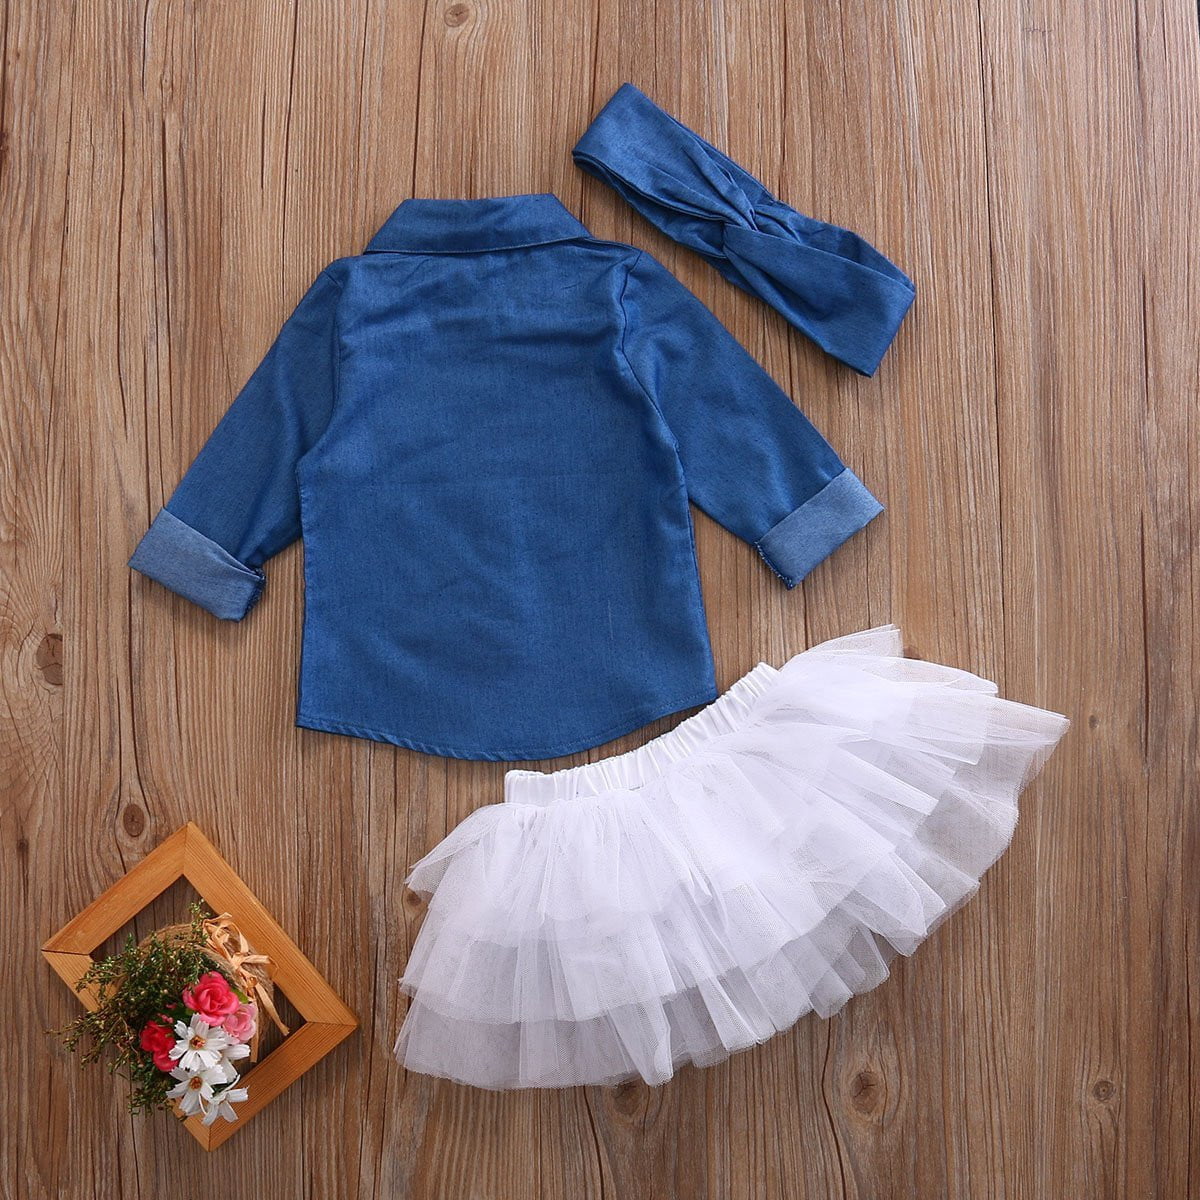 0-5T Babies Girl Summer Clothing Set Baby Girls Denim Shirt Top +Tutu Skirts+Headband 3pcs Outfits Sets - TRIPLE AAA Fashion Collection